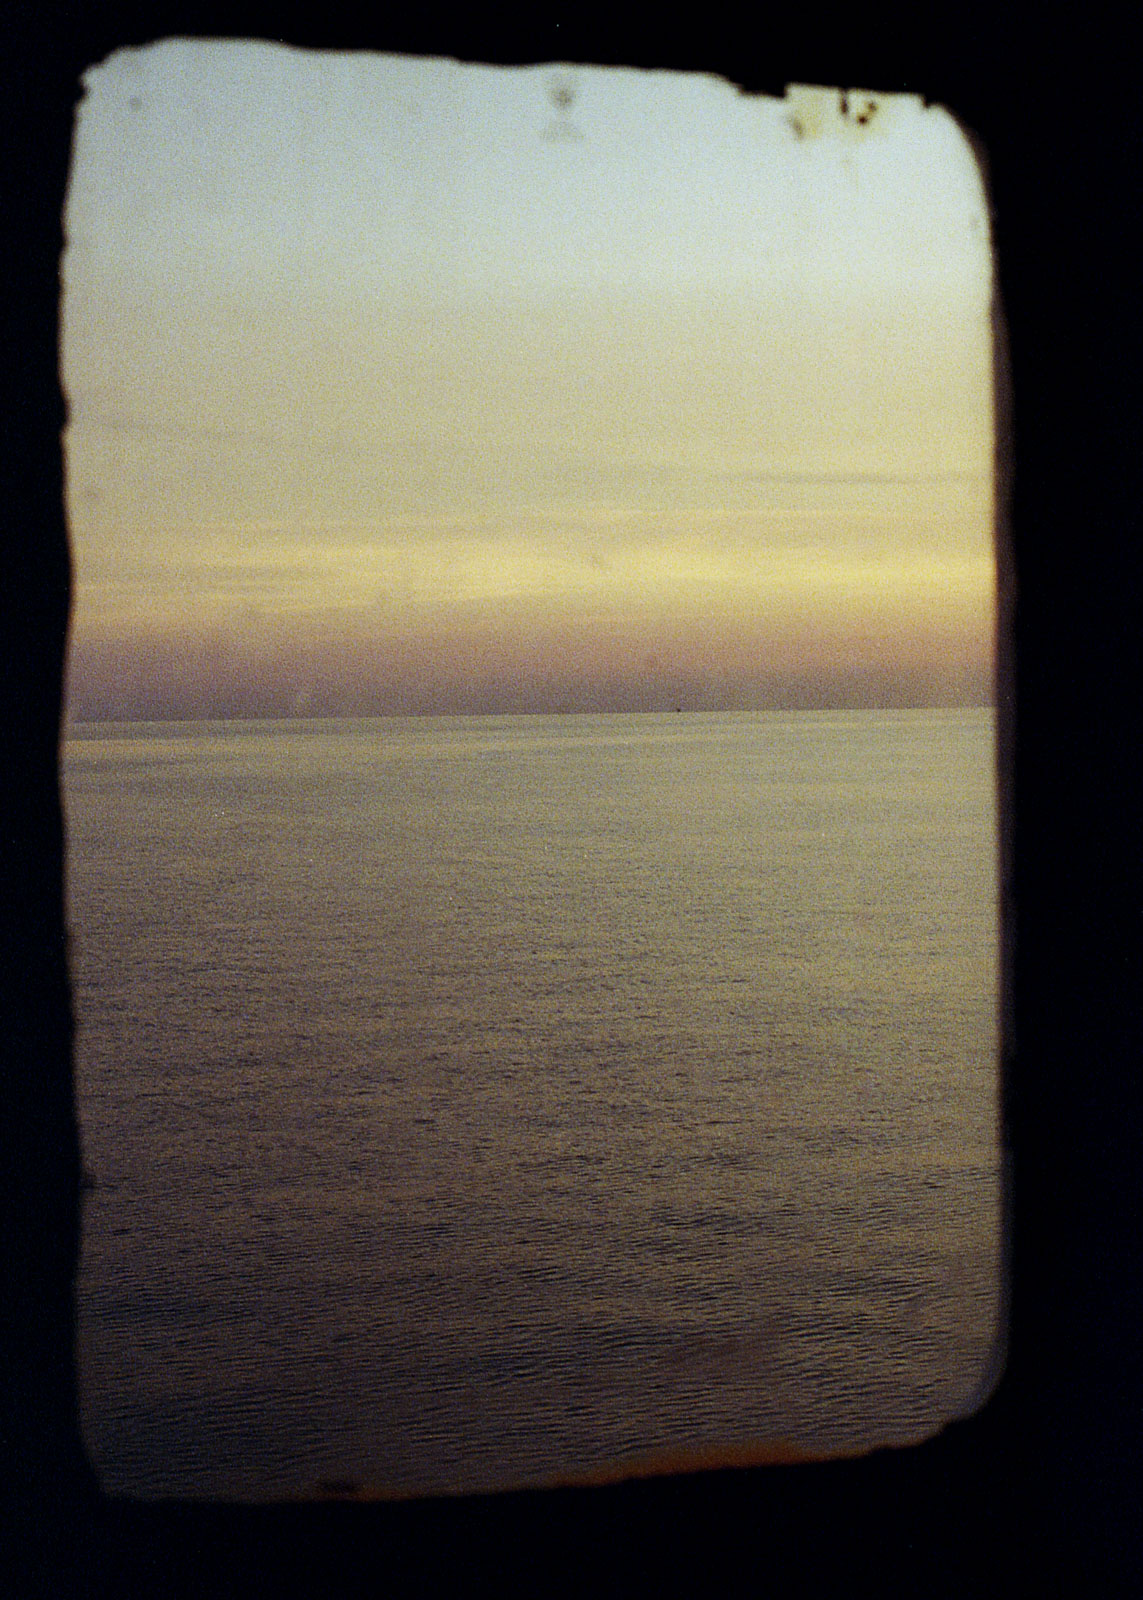 Adriatic Sea from the ferry window